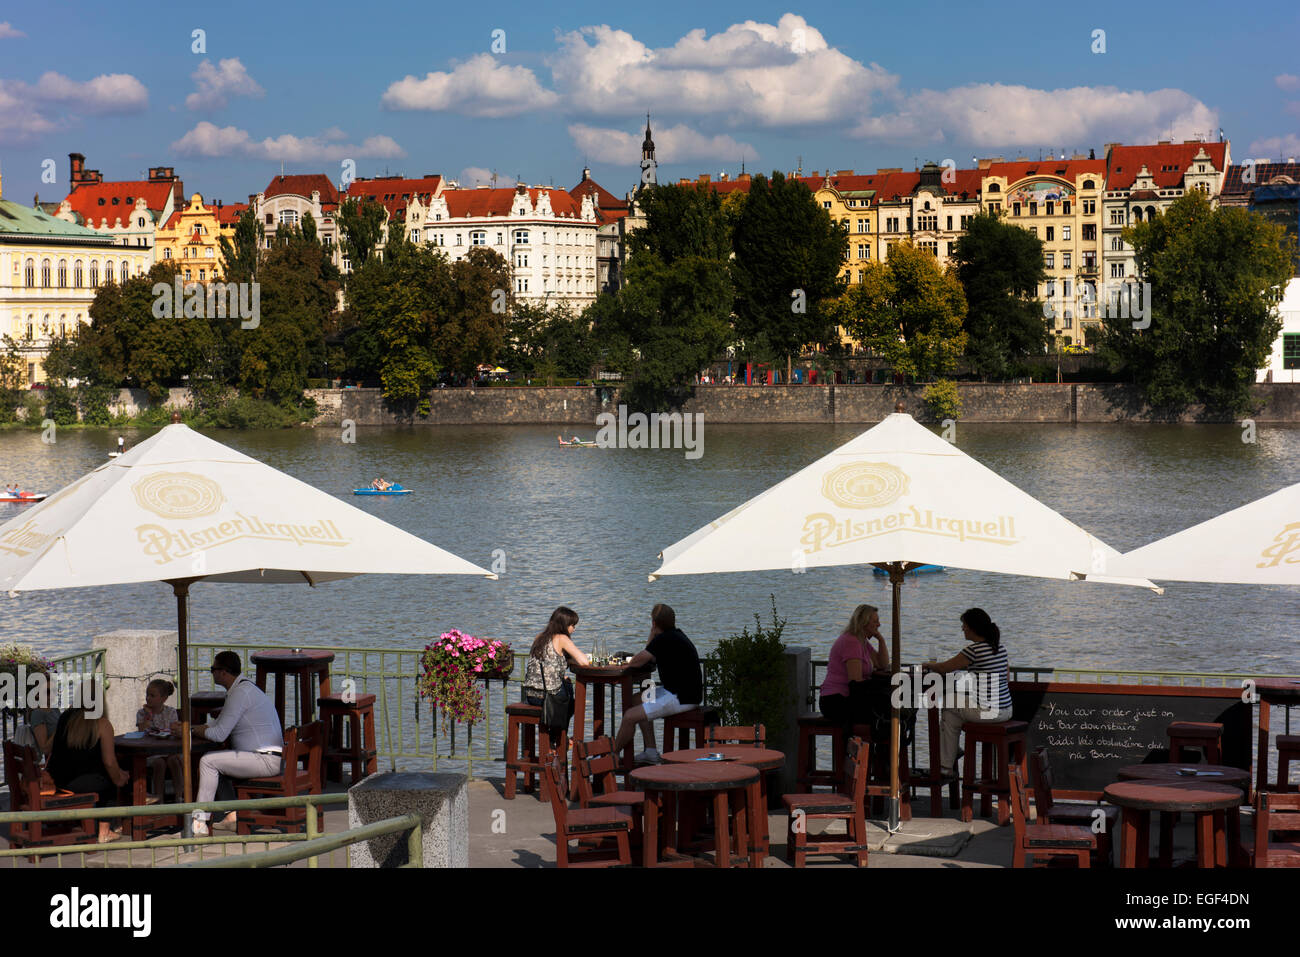 Al fresco dining on the Vltava River in central Prague. Stock Photo